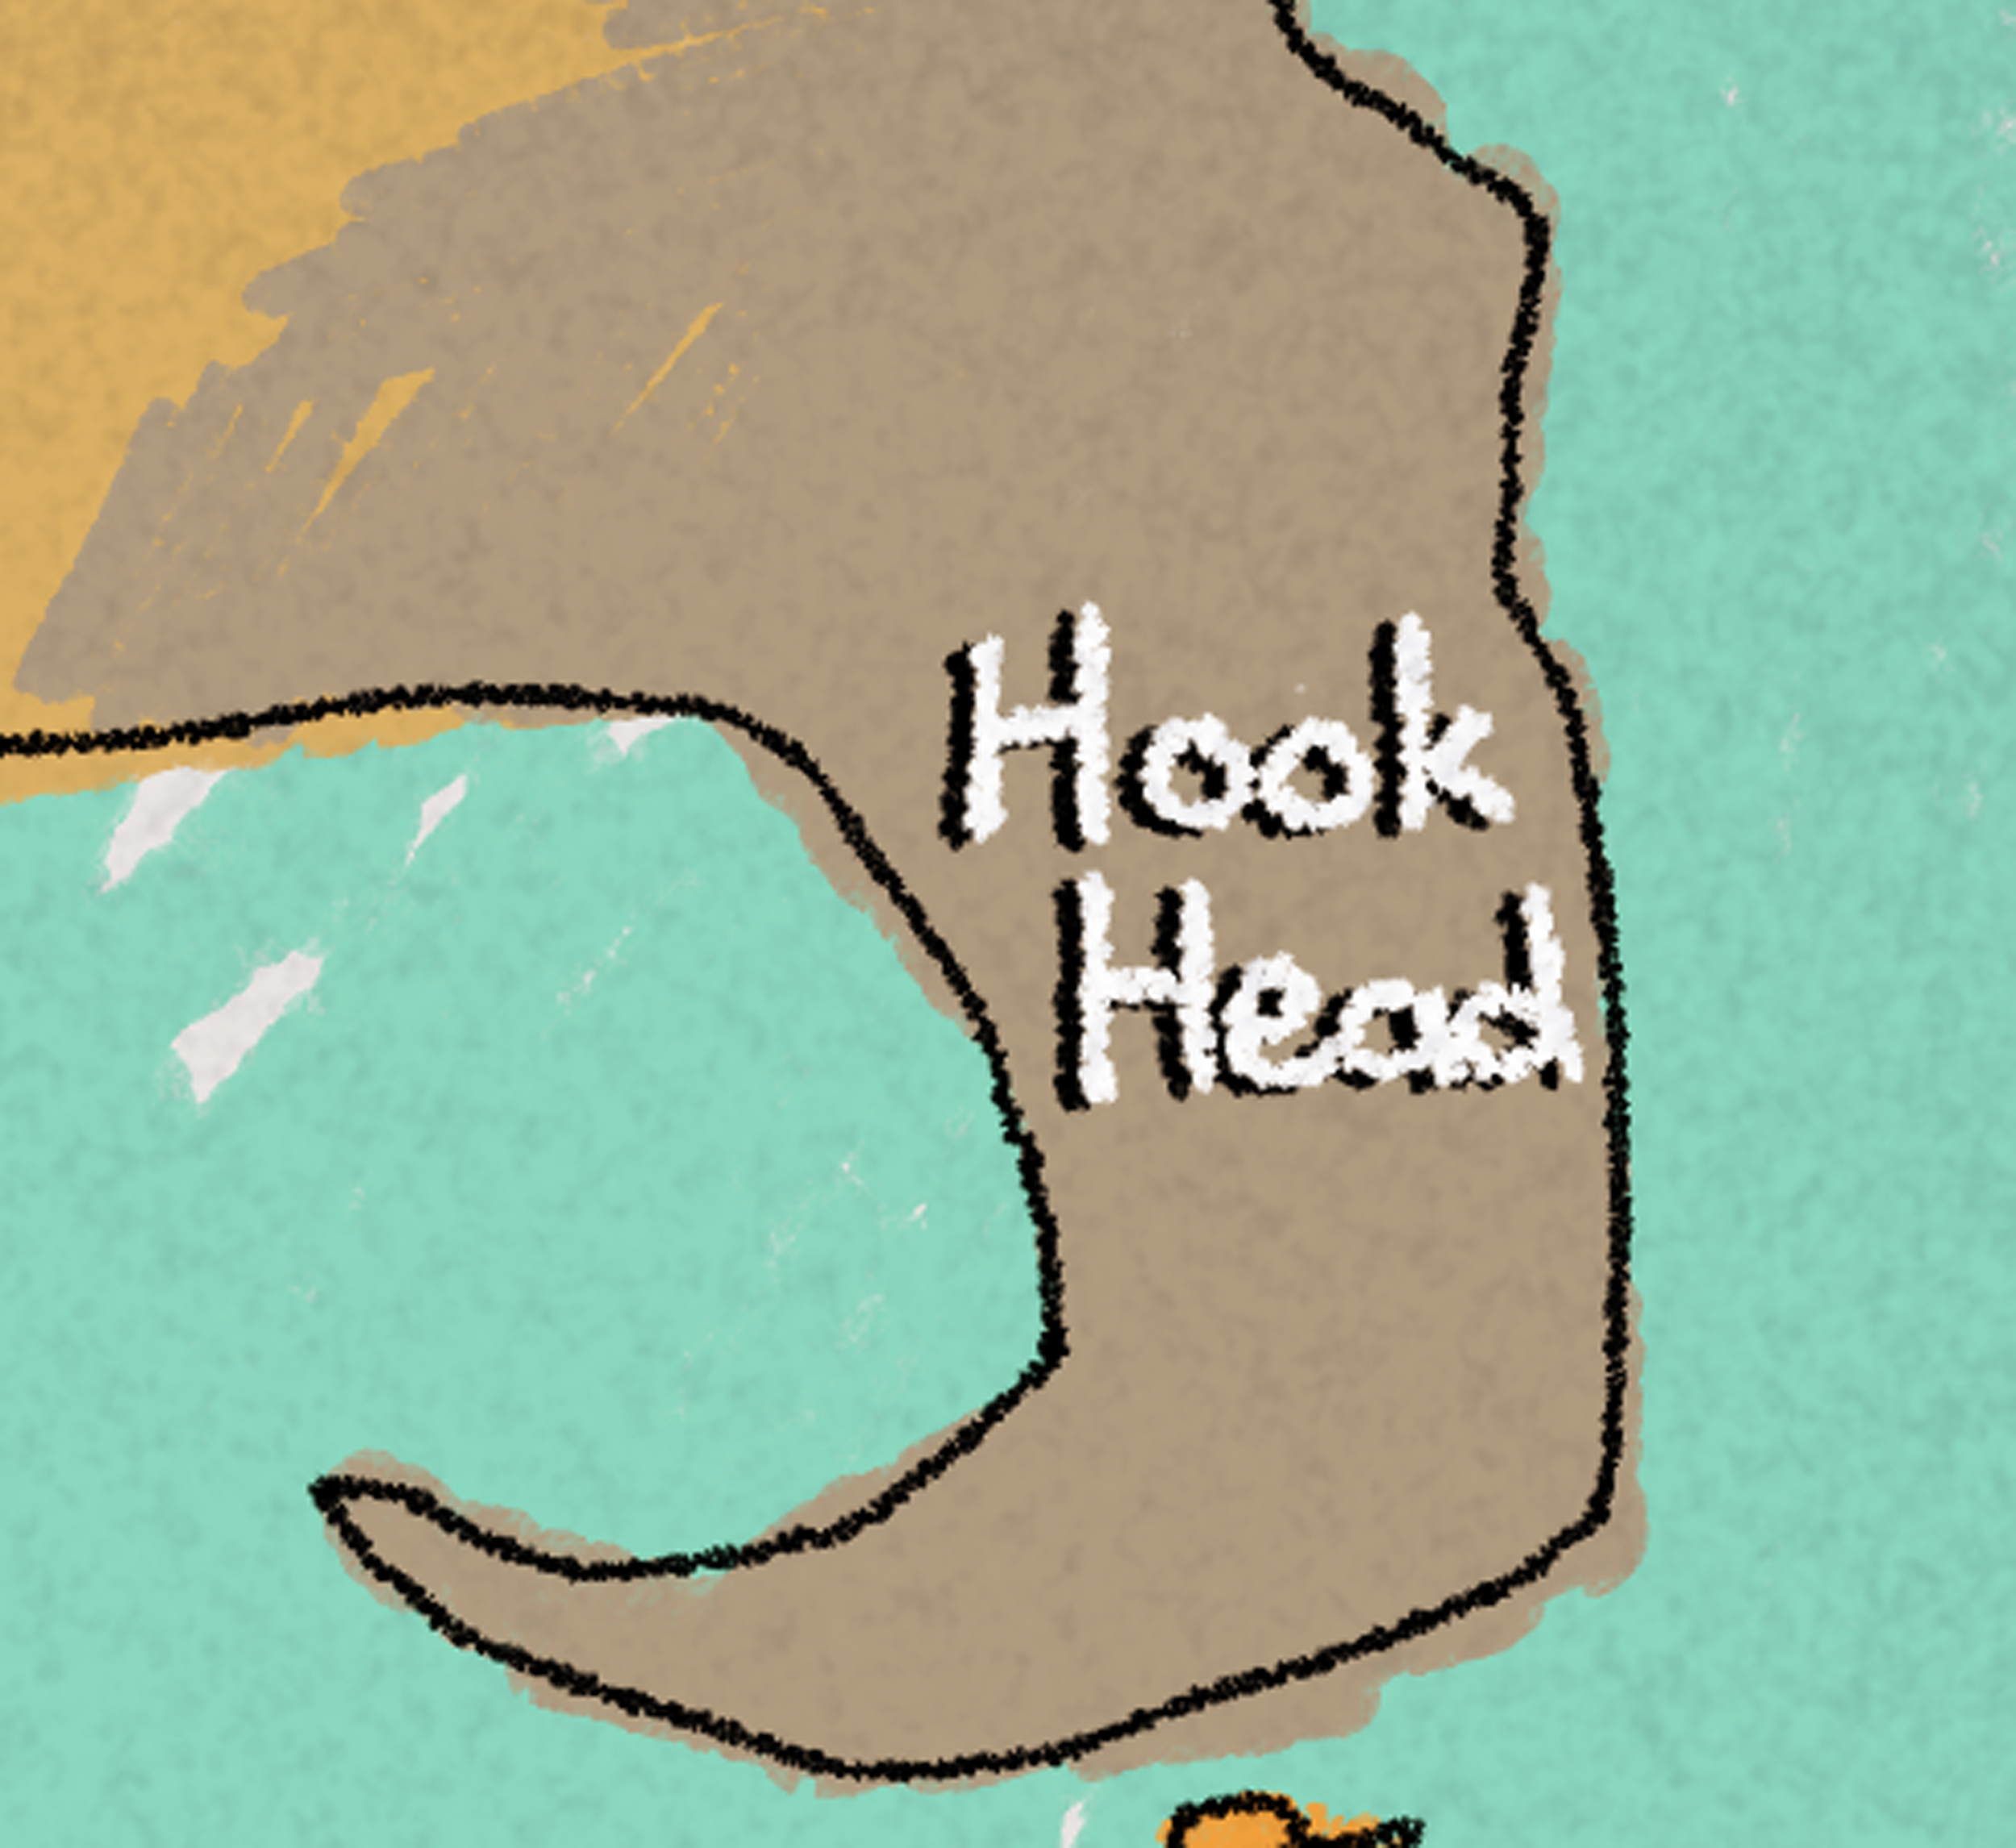 Hook Head